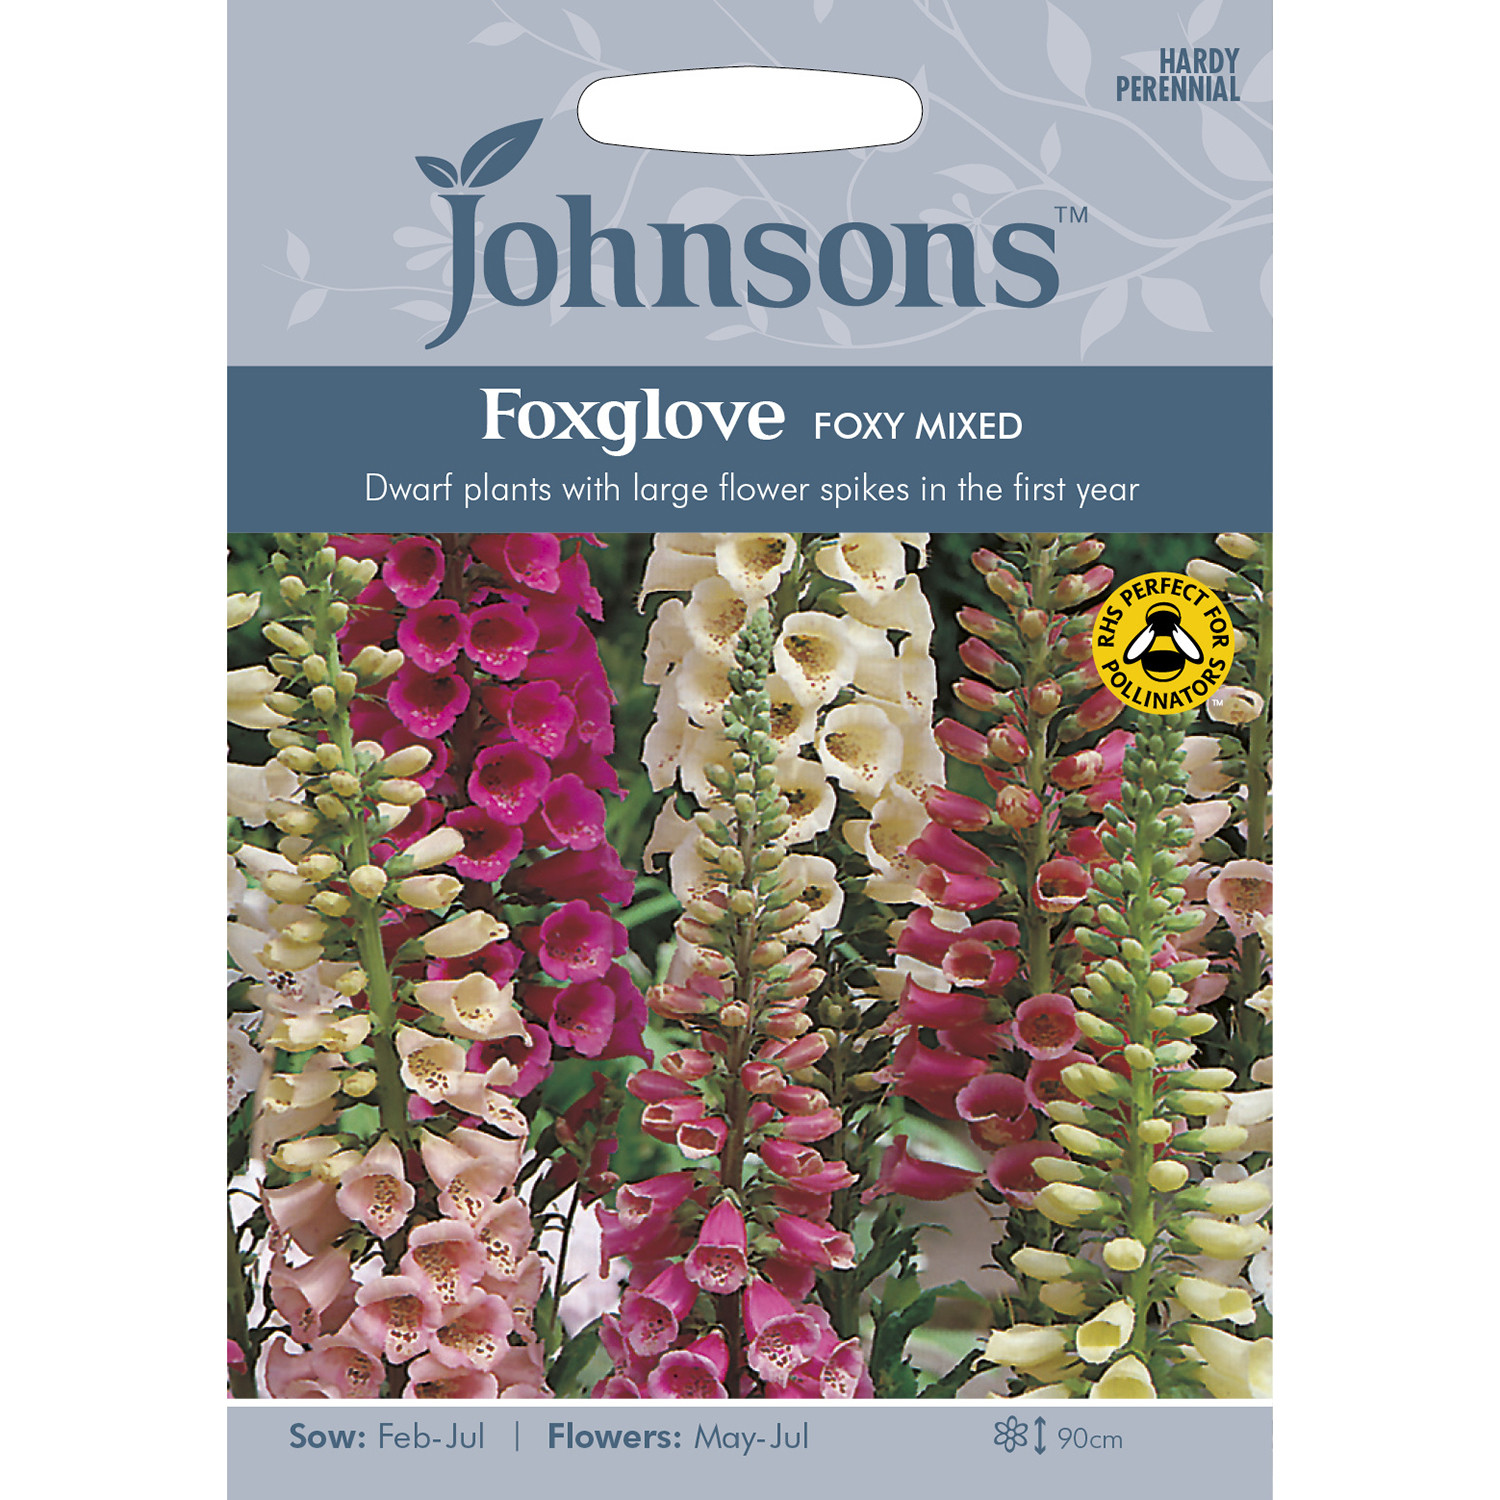 Johnsons Foxglove Foxy Mixed Flower Seeds Image 2